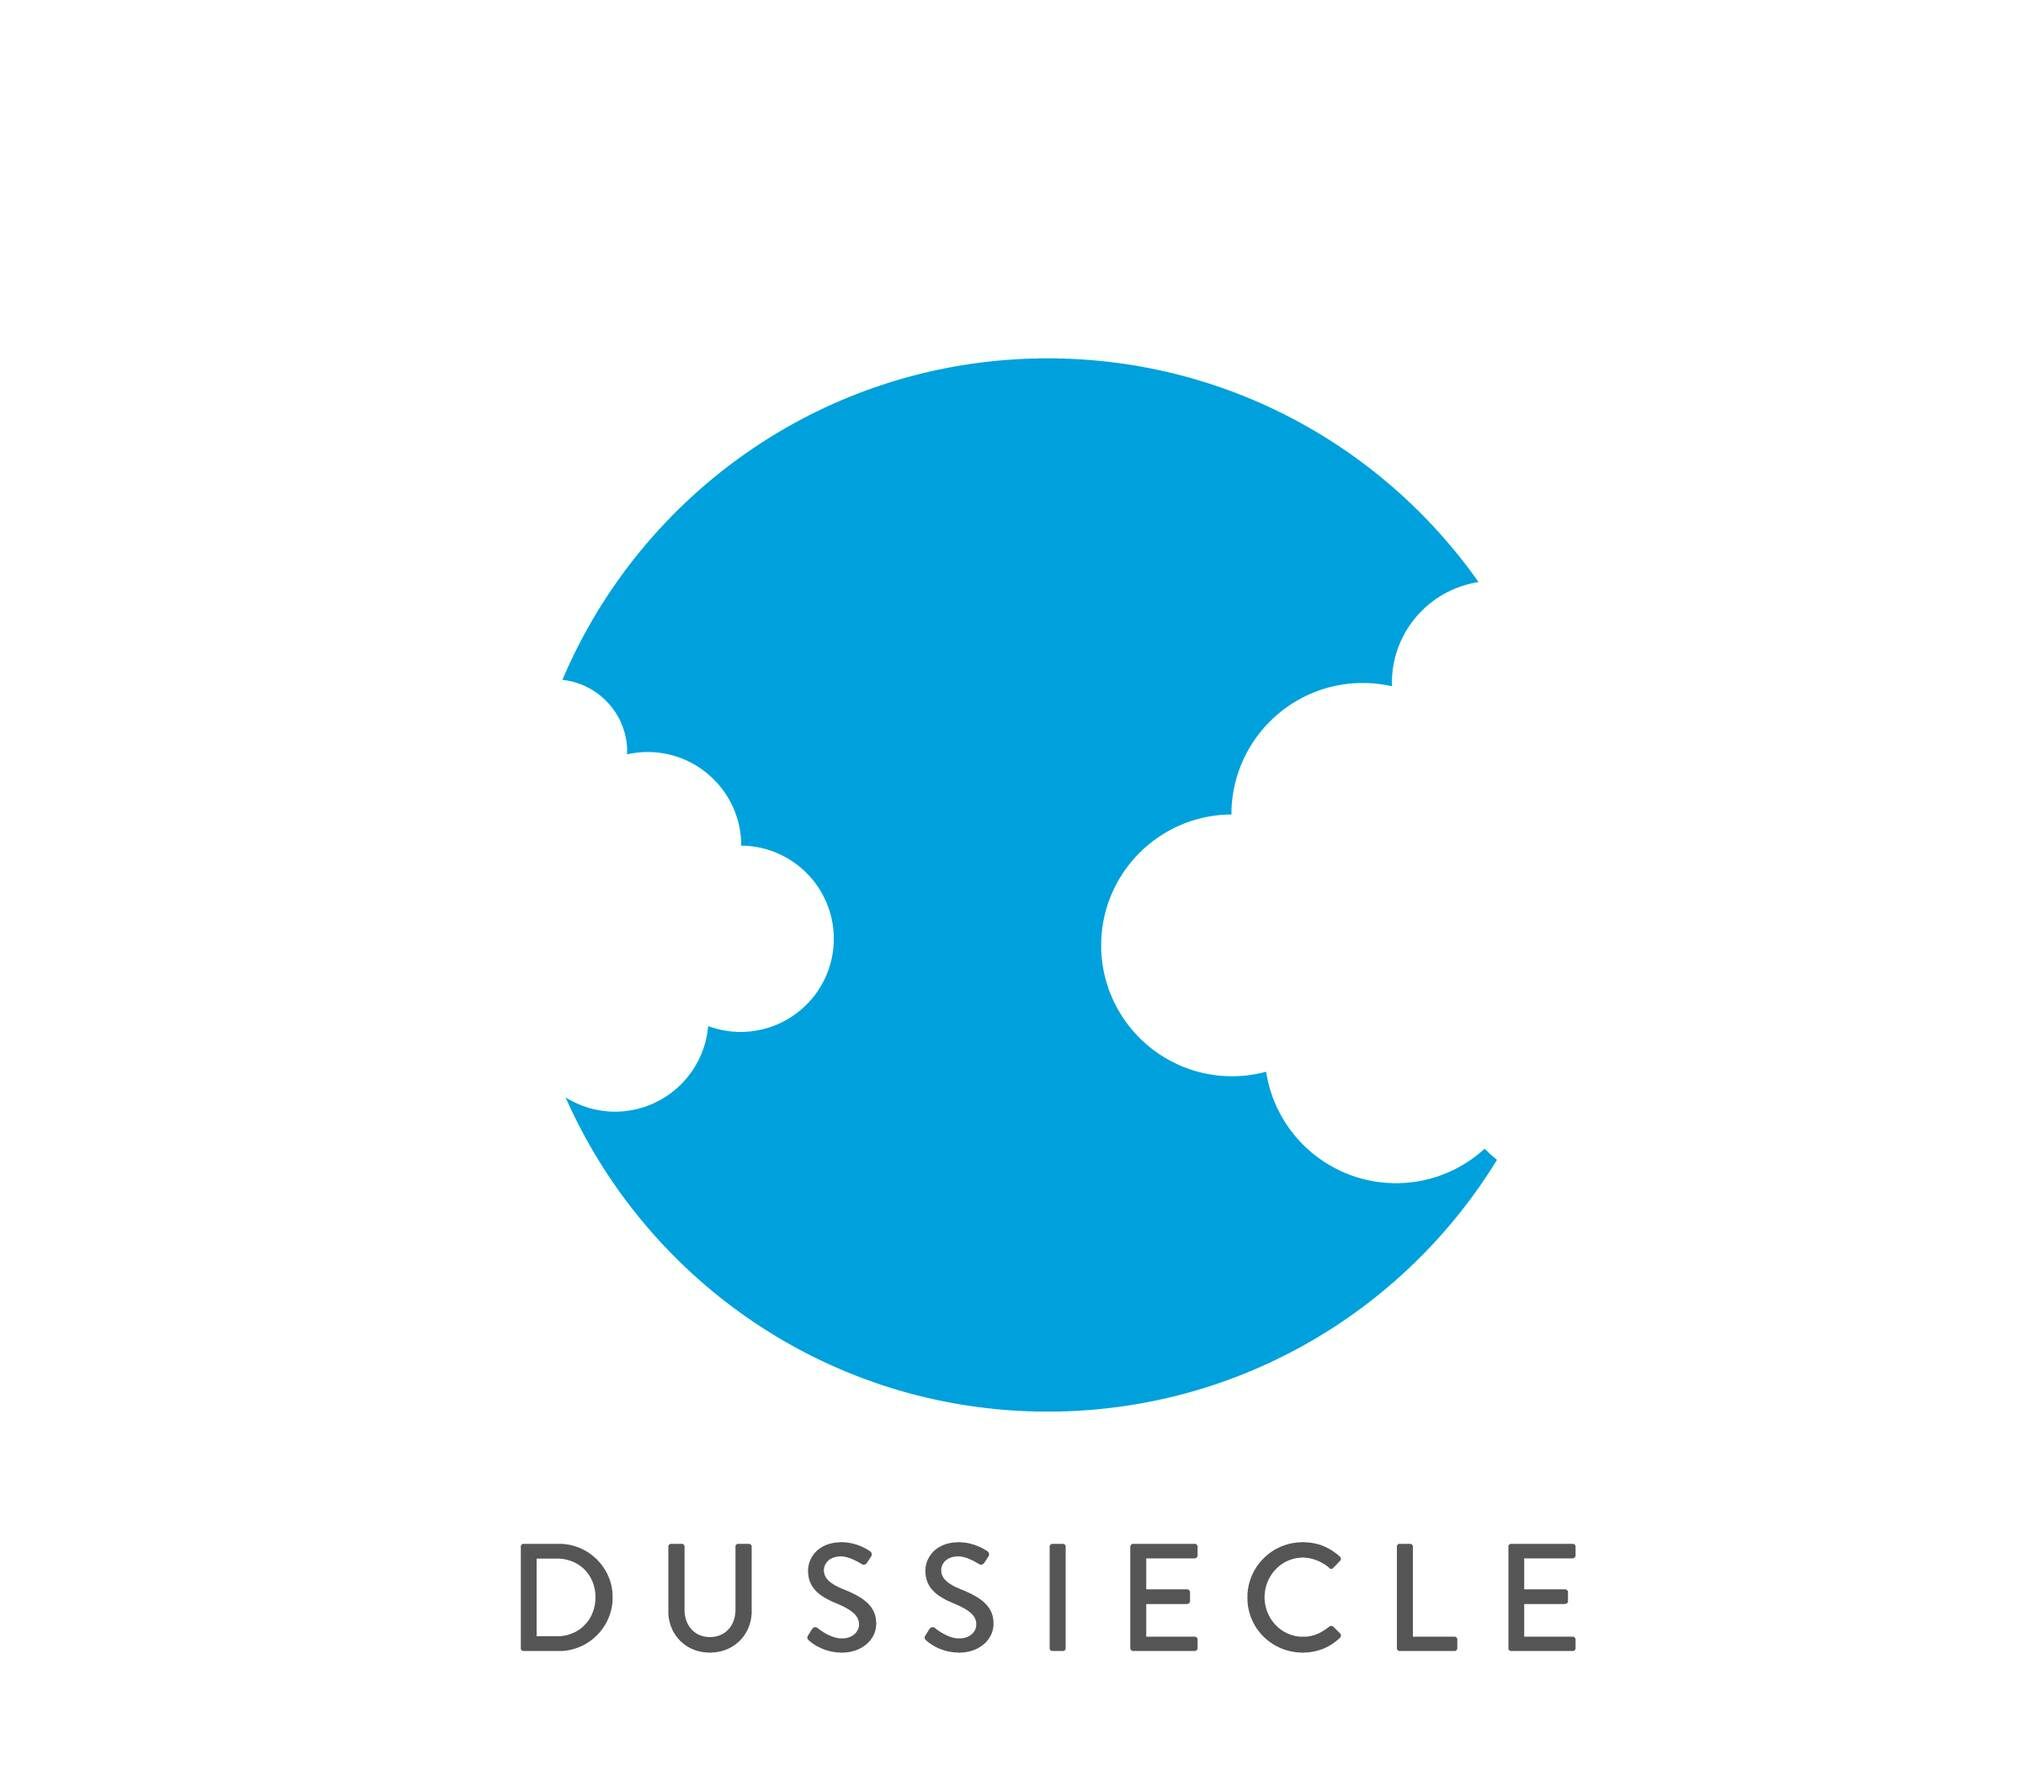 Dussiecle